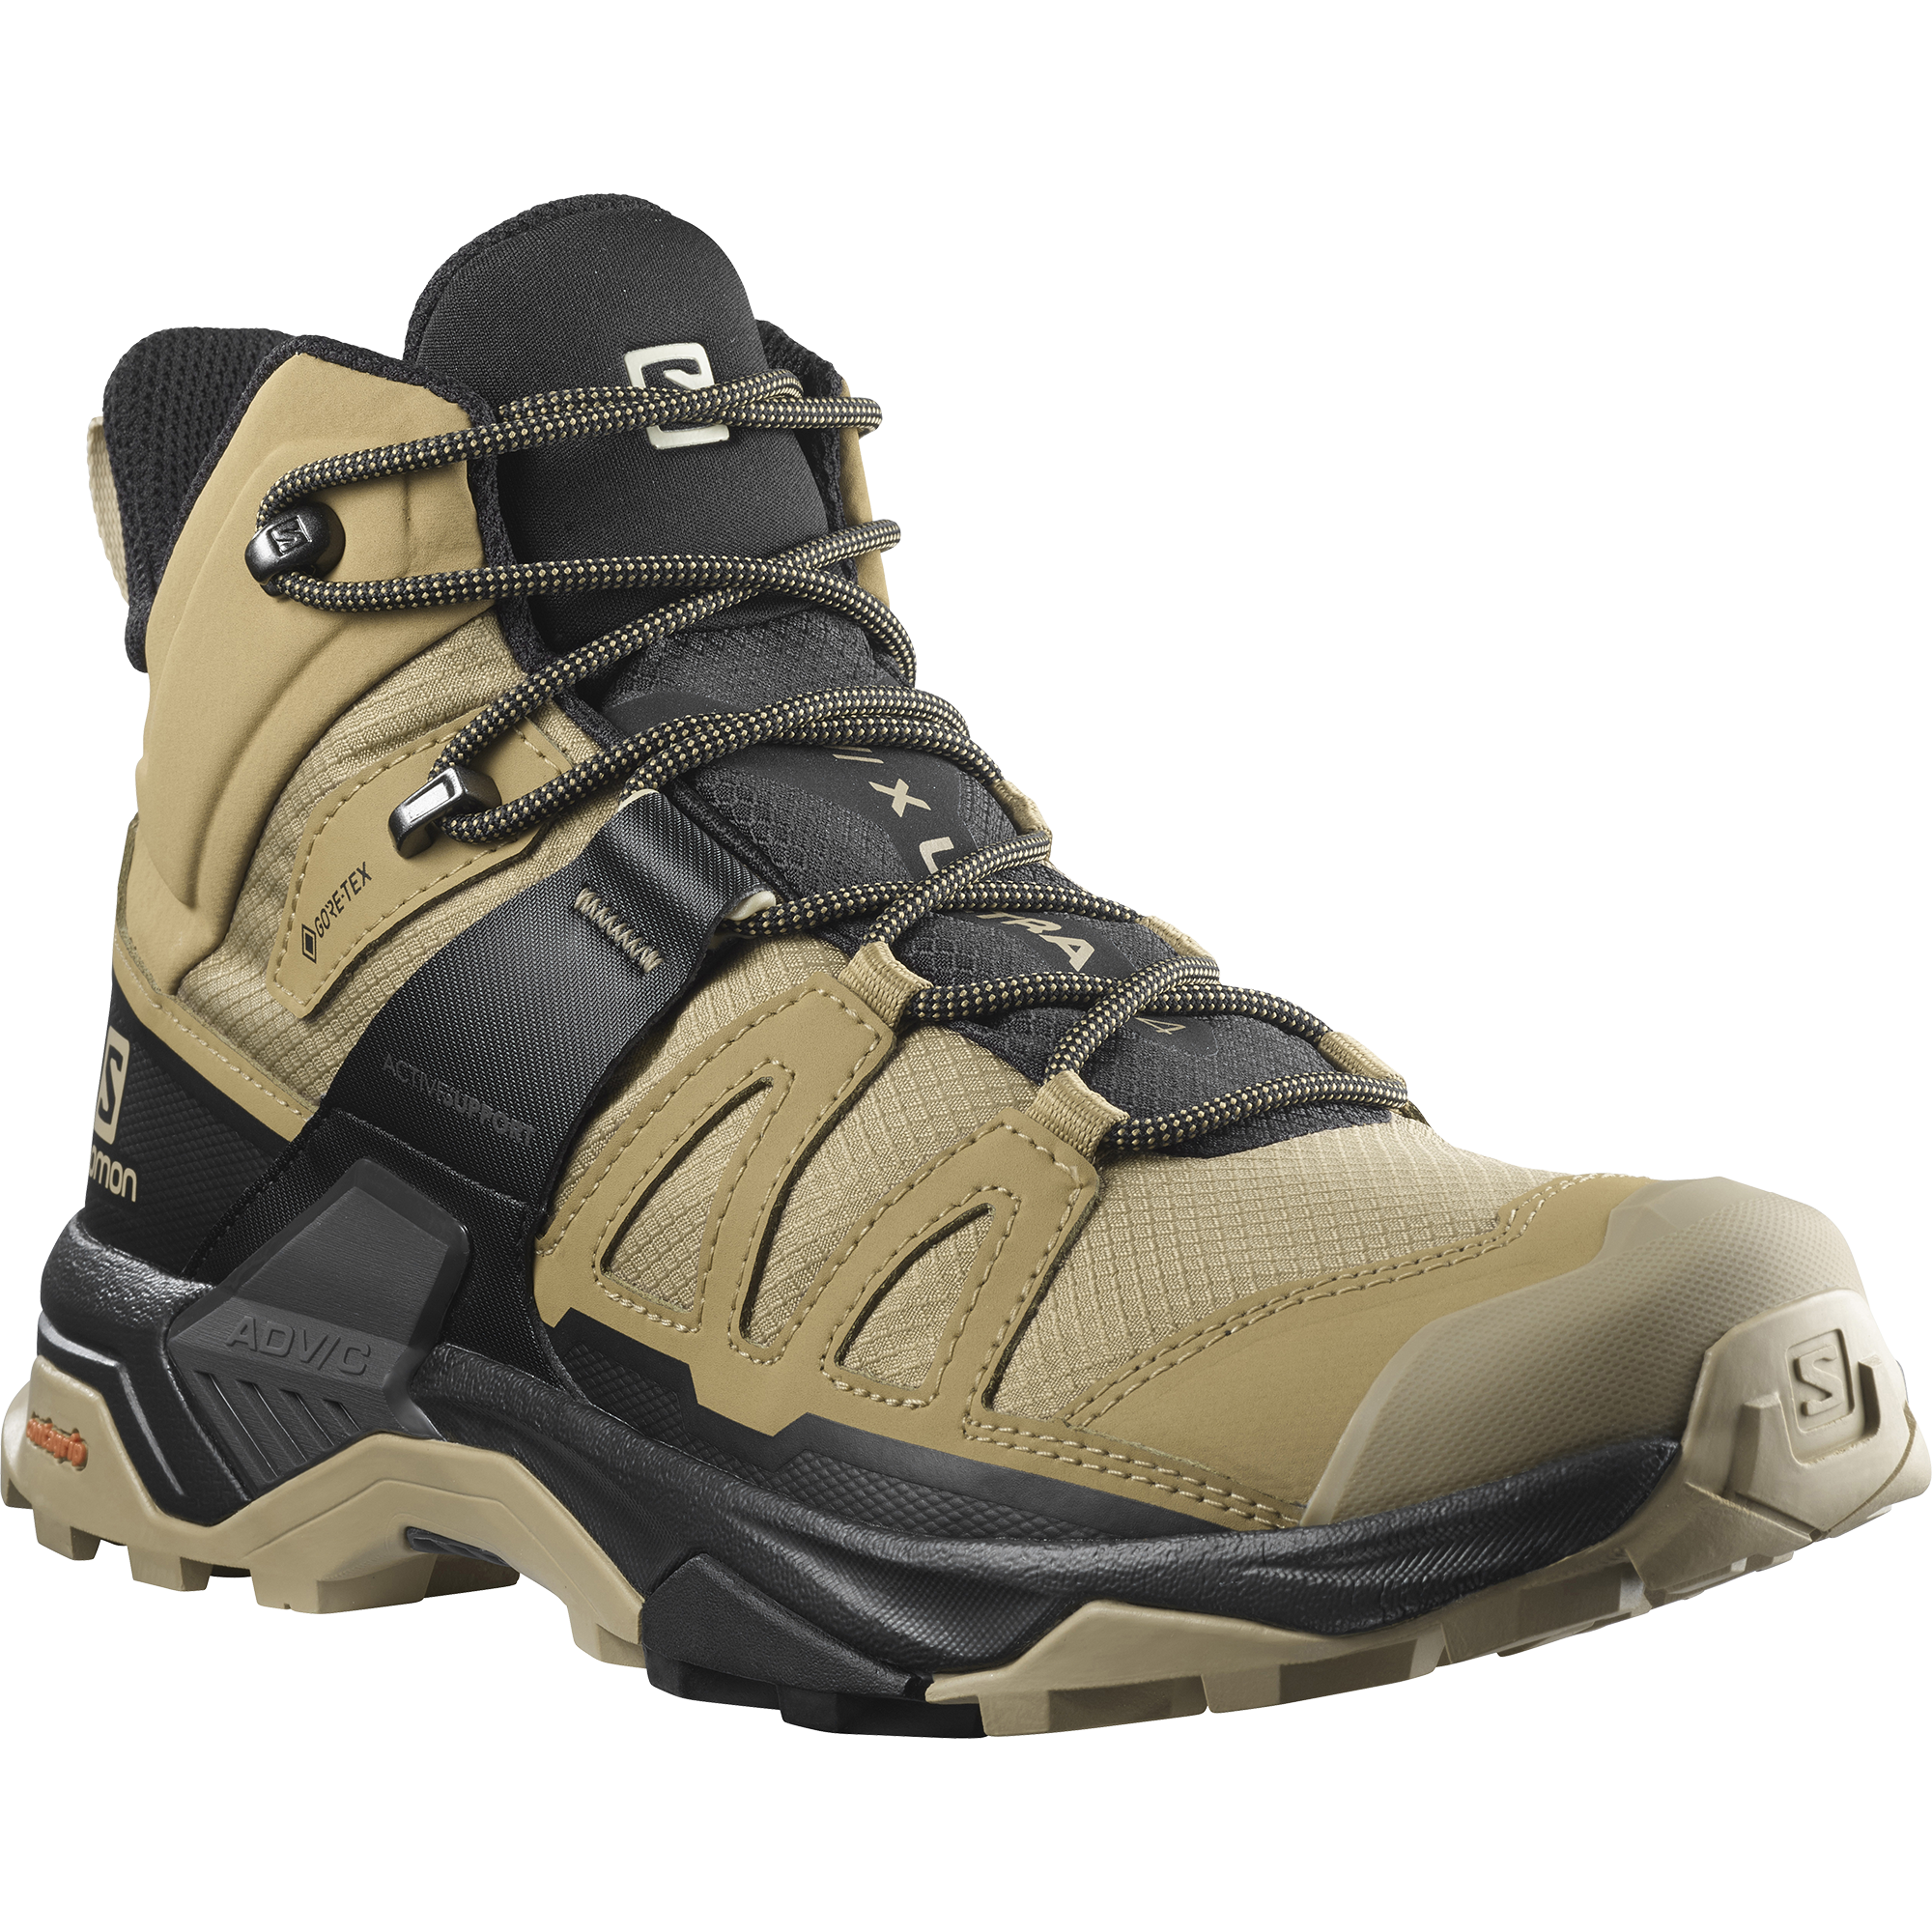 Salomon X Ultra 4 Mid GORE-TEX Hiking Boots for Men - Kelp/Black/Safari - 10M